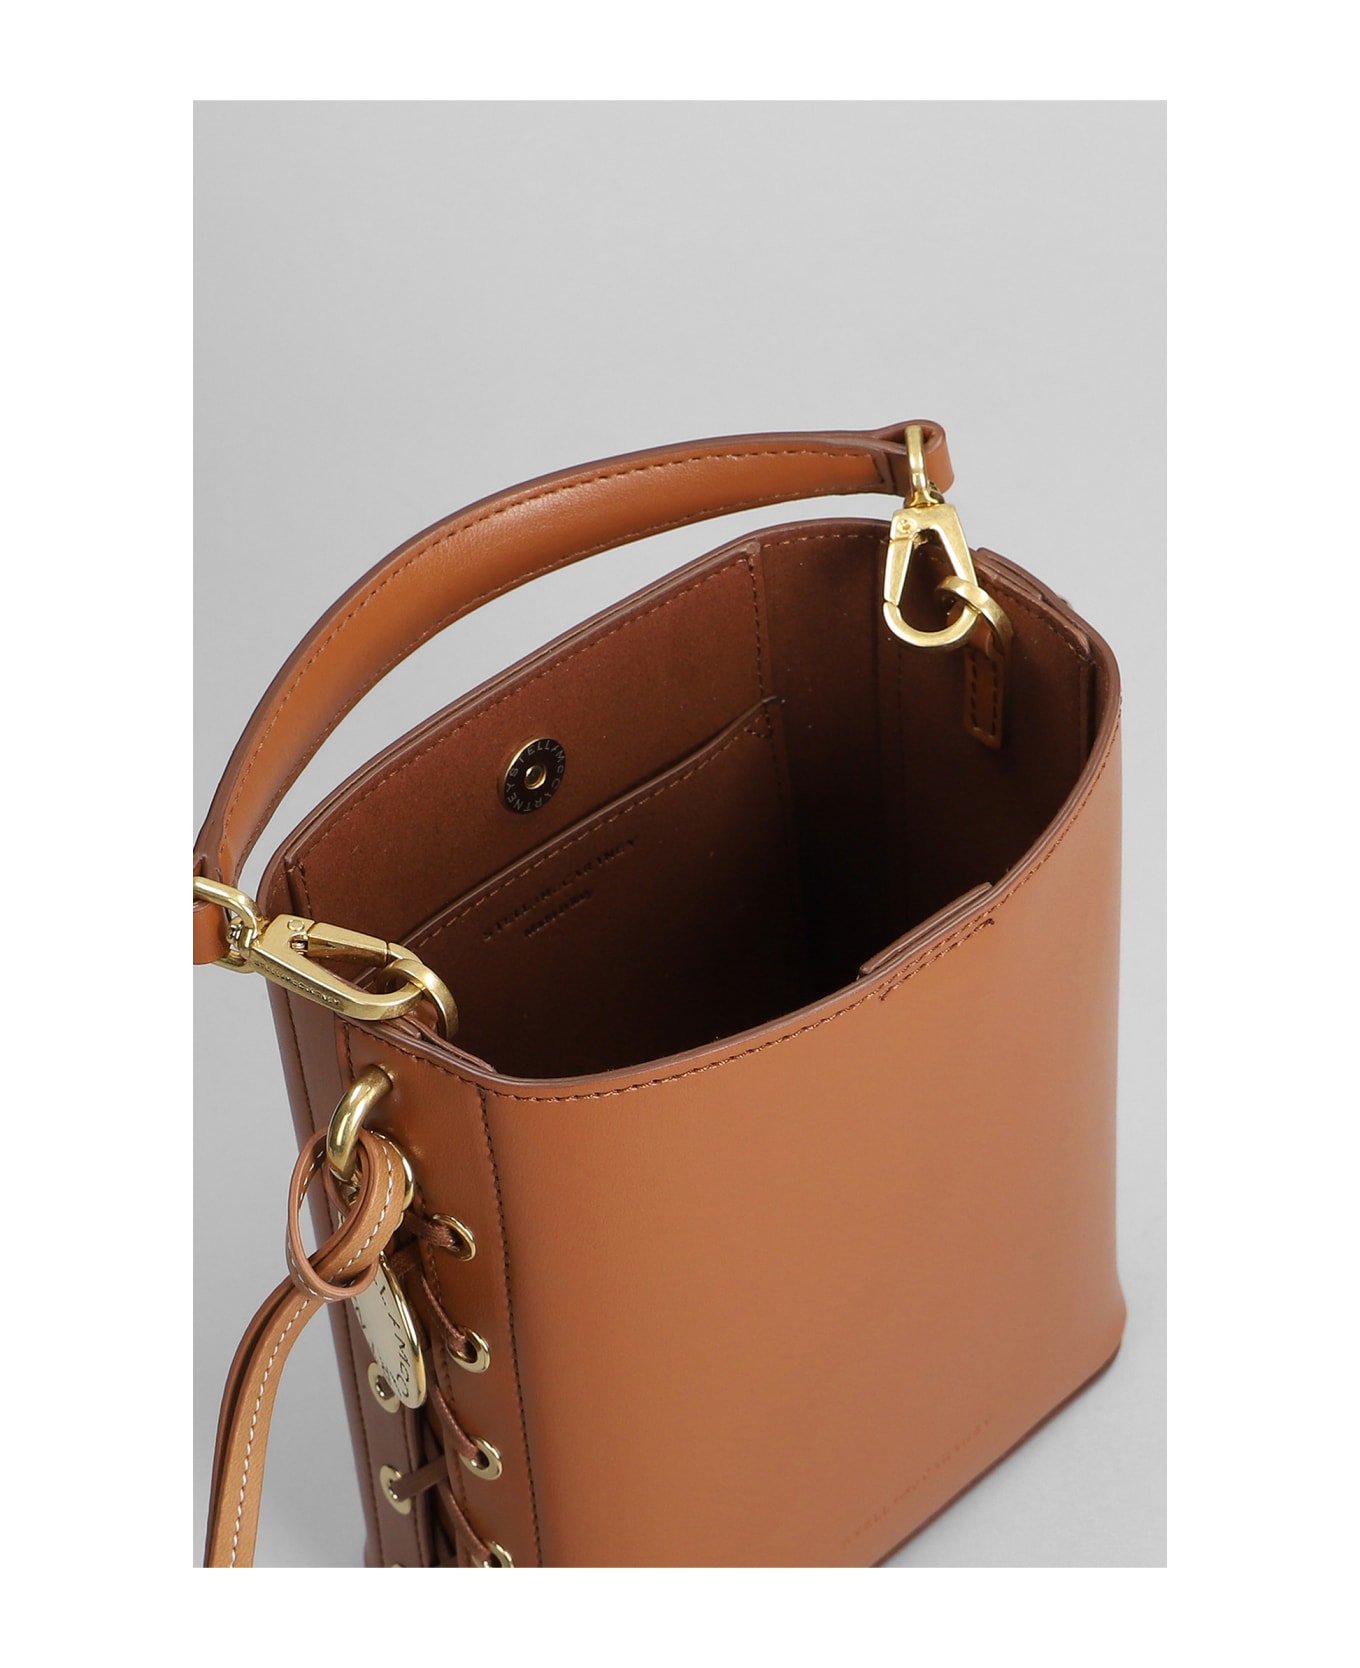 Stella McCartney Hand Bag In Brown Polyamide - brown トートバッグ